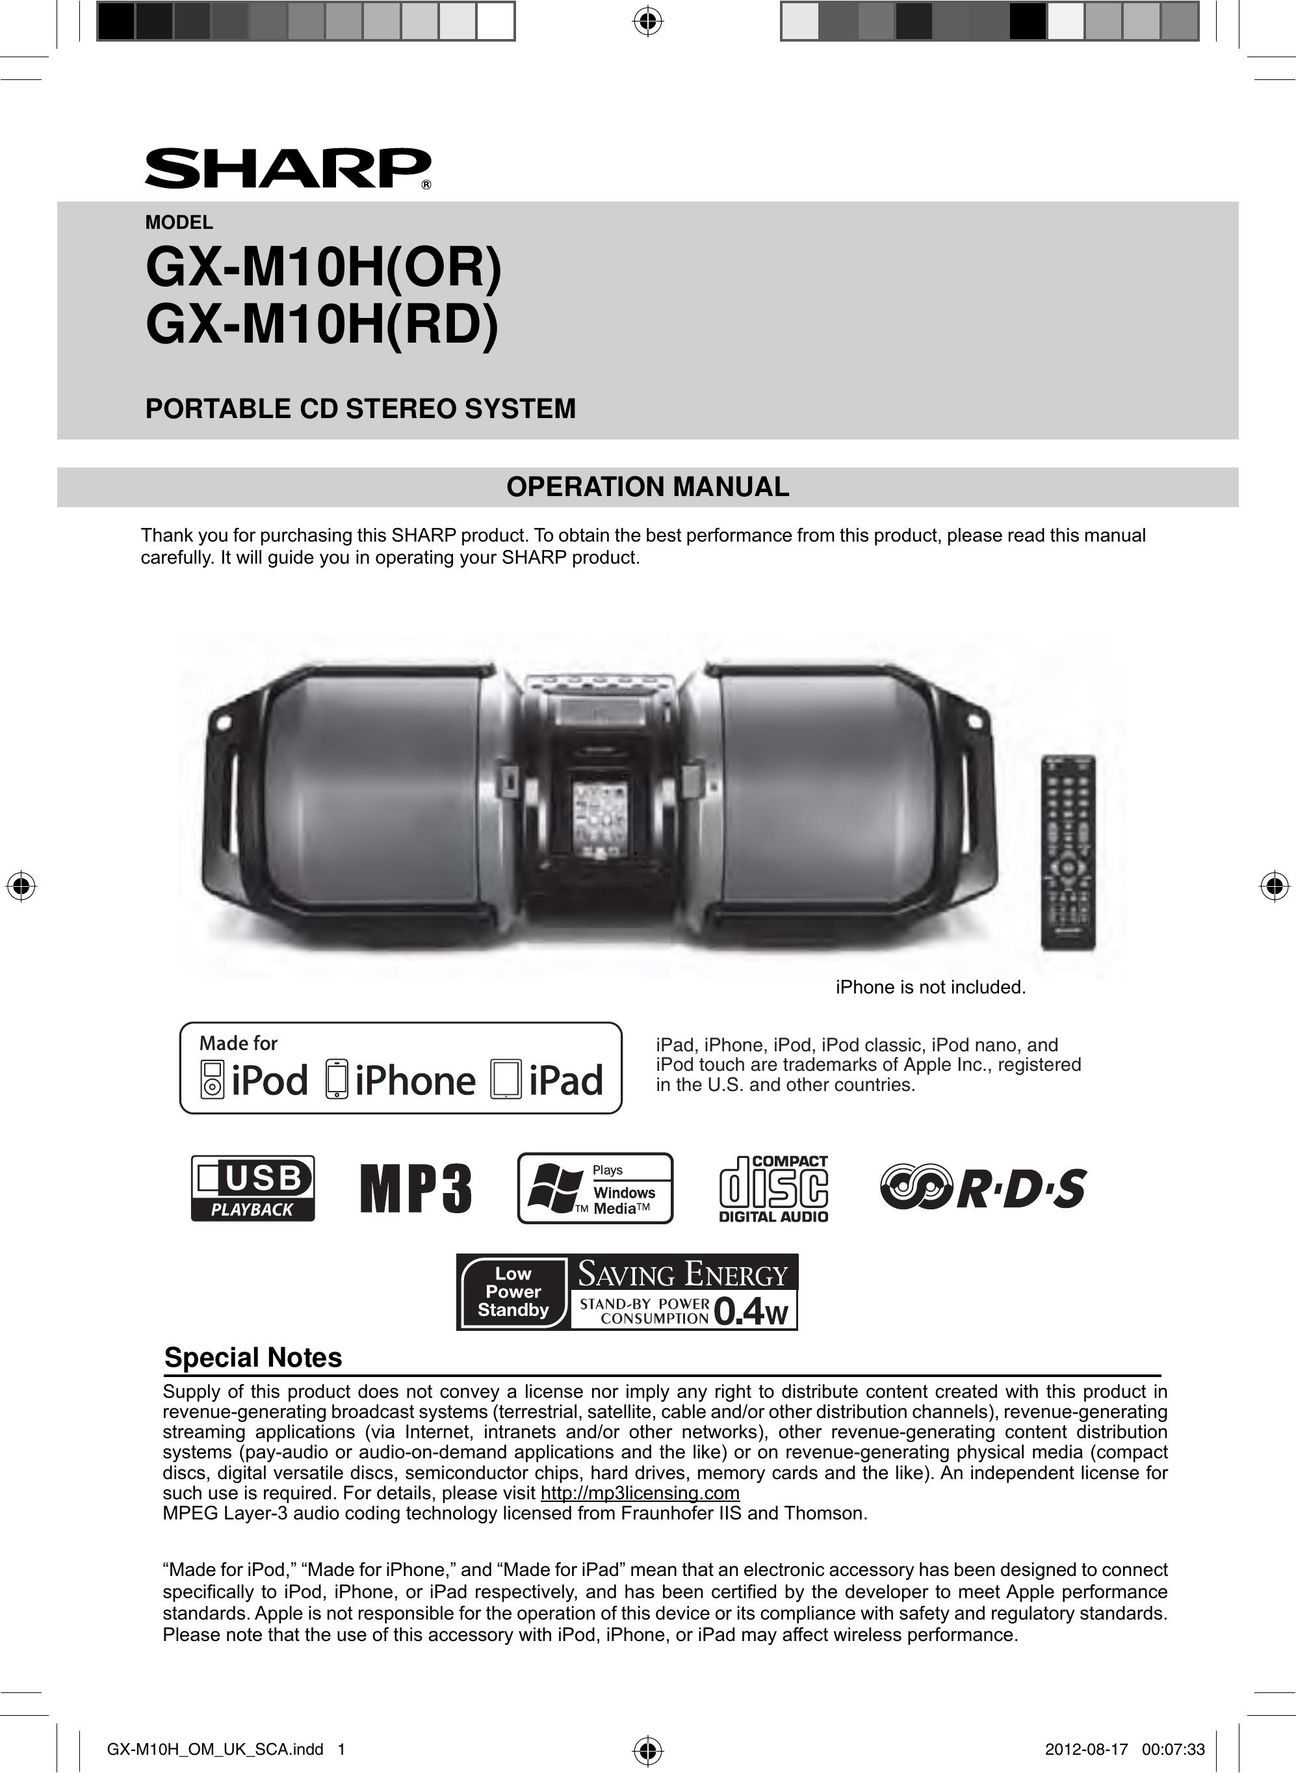 Sharp GX-M10H(RD) MP3 Player User Manual